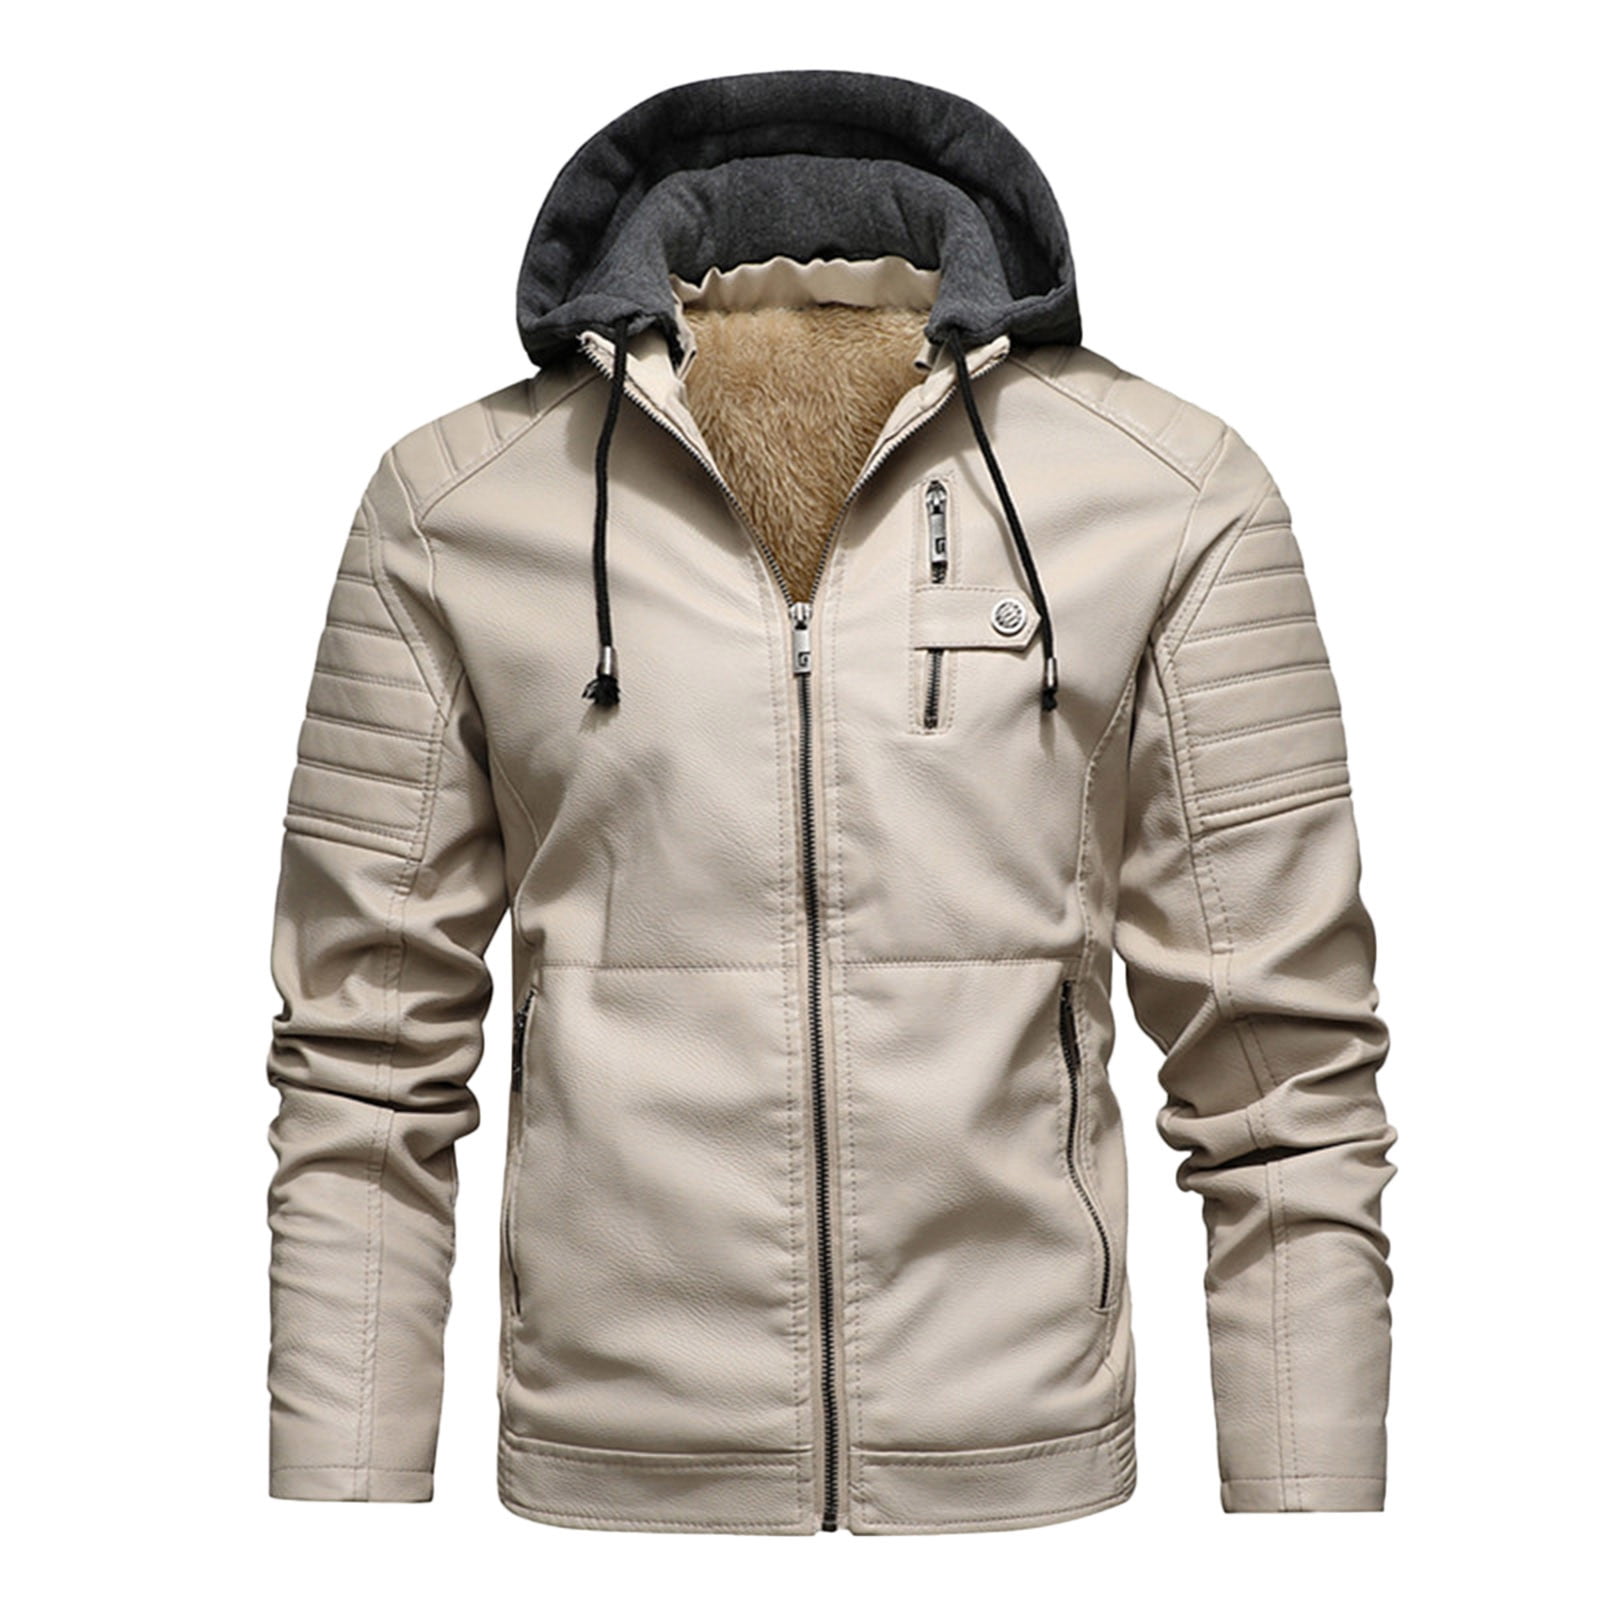 raket Overname afbreken Larisalt Winter Jackets For Men,Men's Lightweight Full Zip Soft Polar Jacket  Outdoor Recreation Coat With Zipper Pockets Gray,4XL - Walmart.com